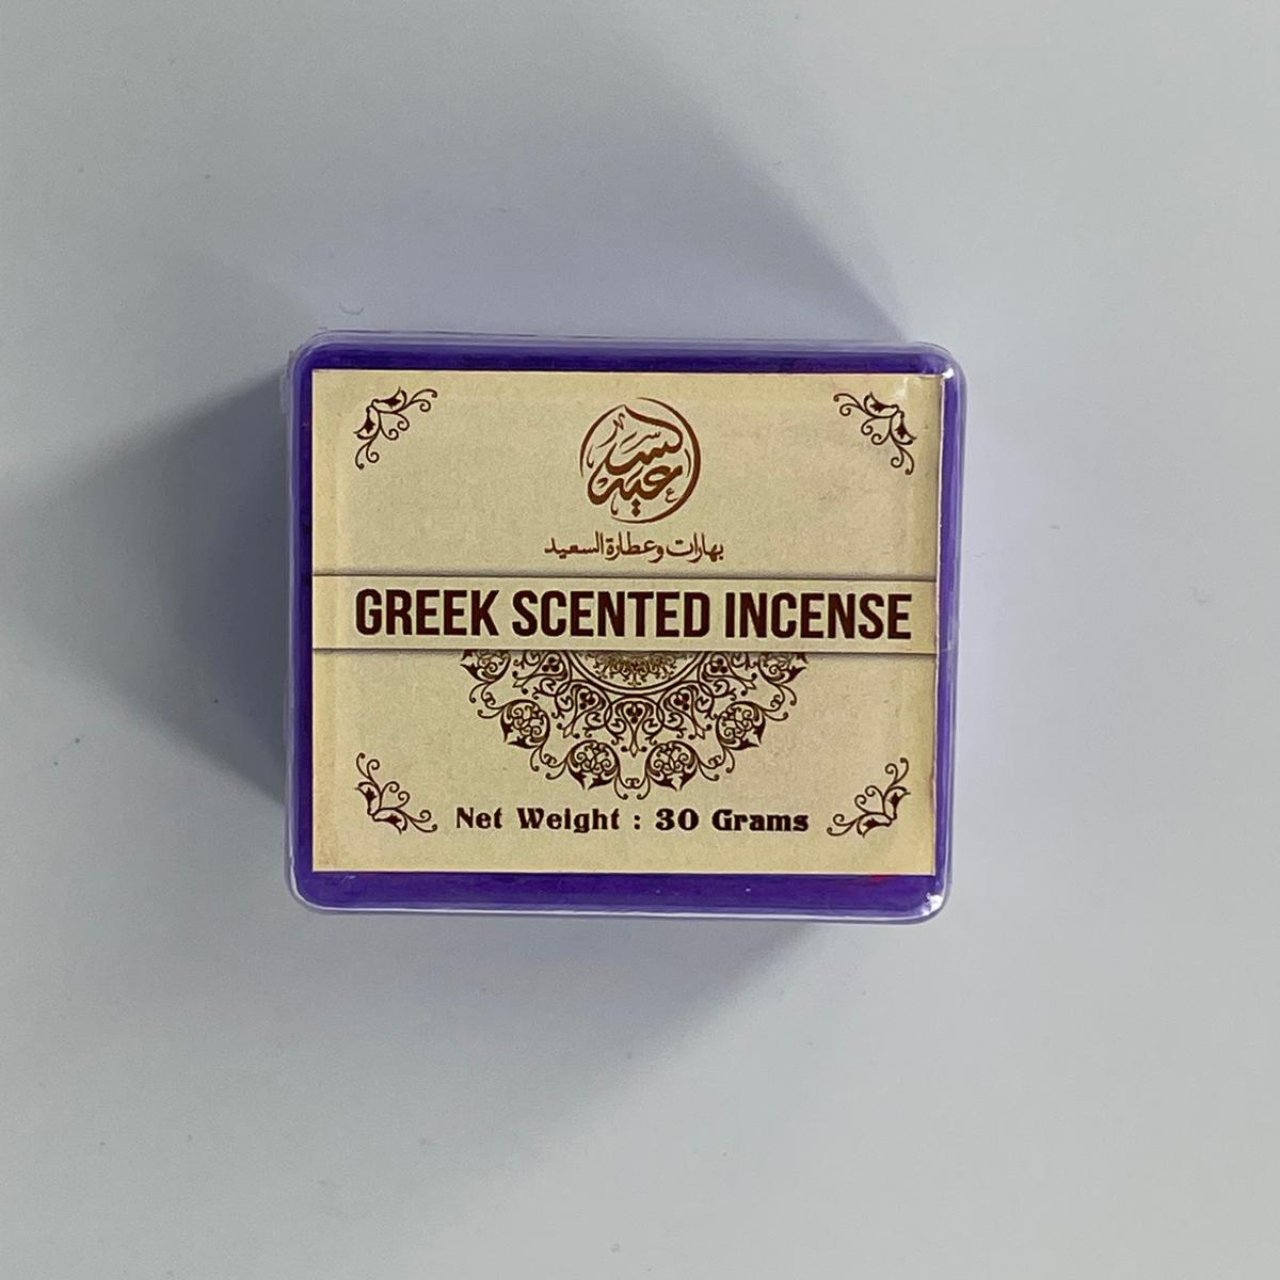 Greek-scented incense البخور اليوناني - بهارات و عطارة السعيد